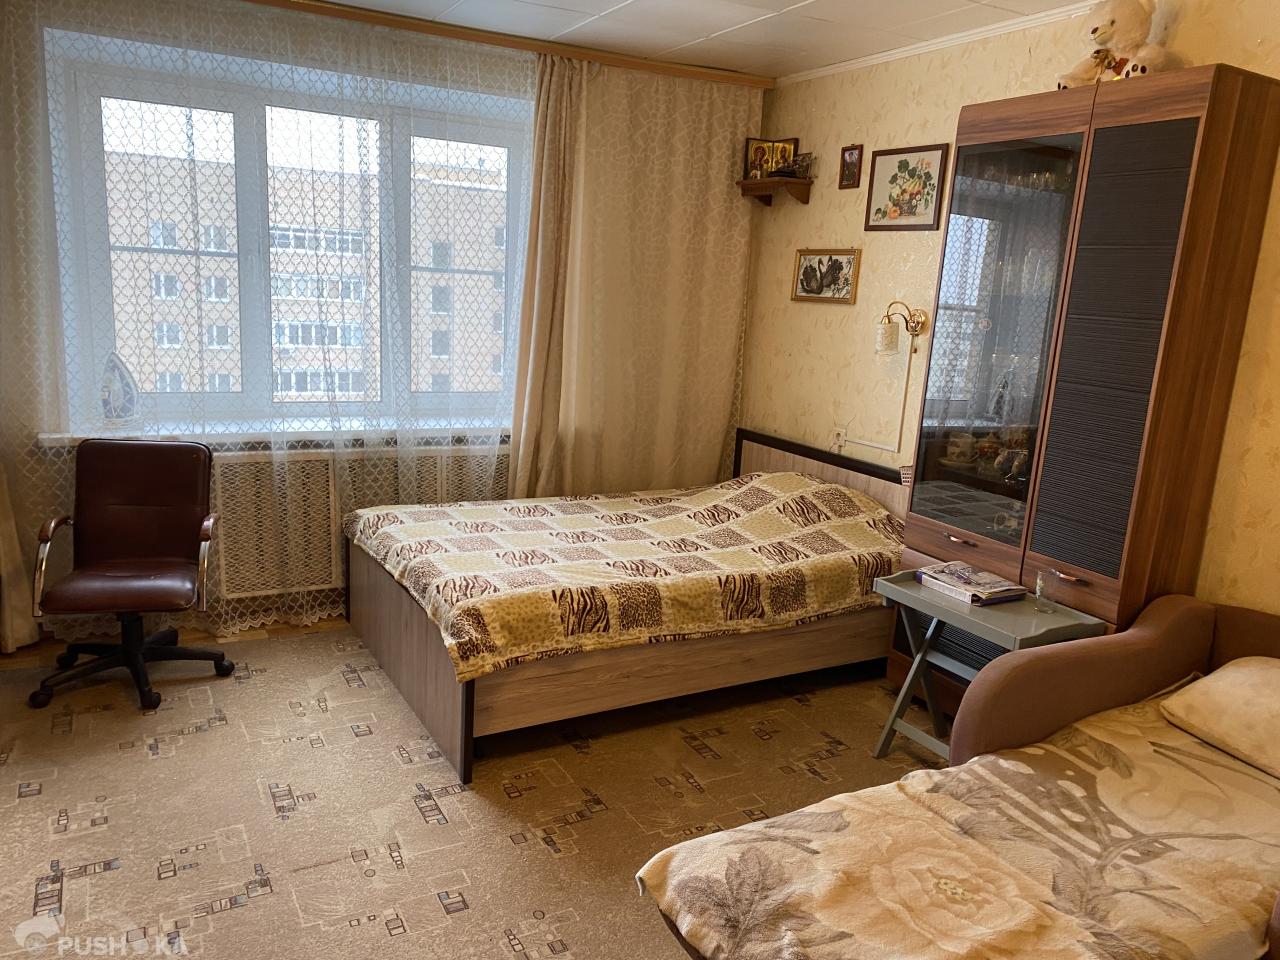 Продаётся 3-комнатная квартира 64.0 кв.м. этаж 8/9 за 10 300 000 руб 